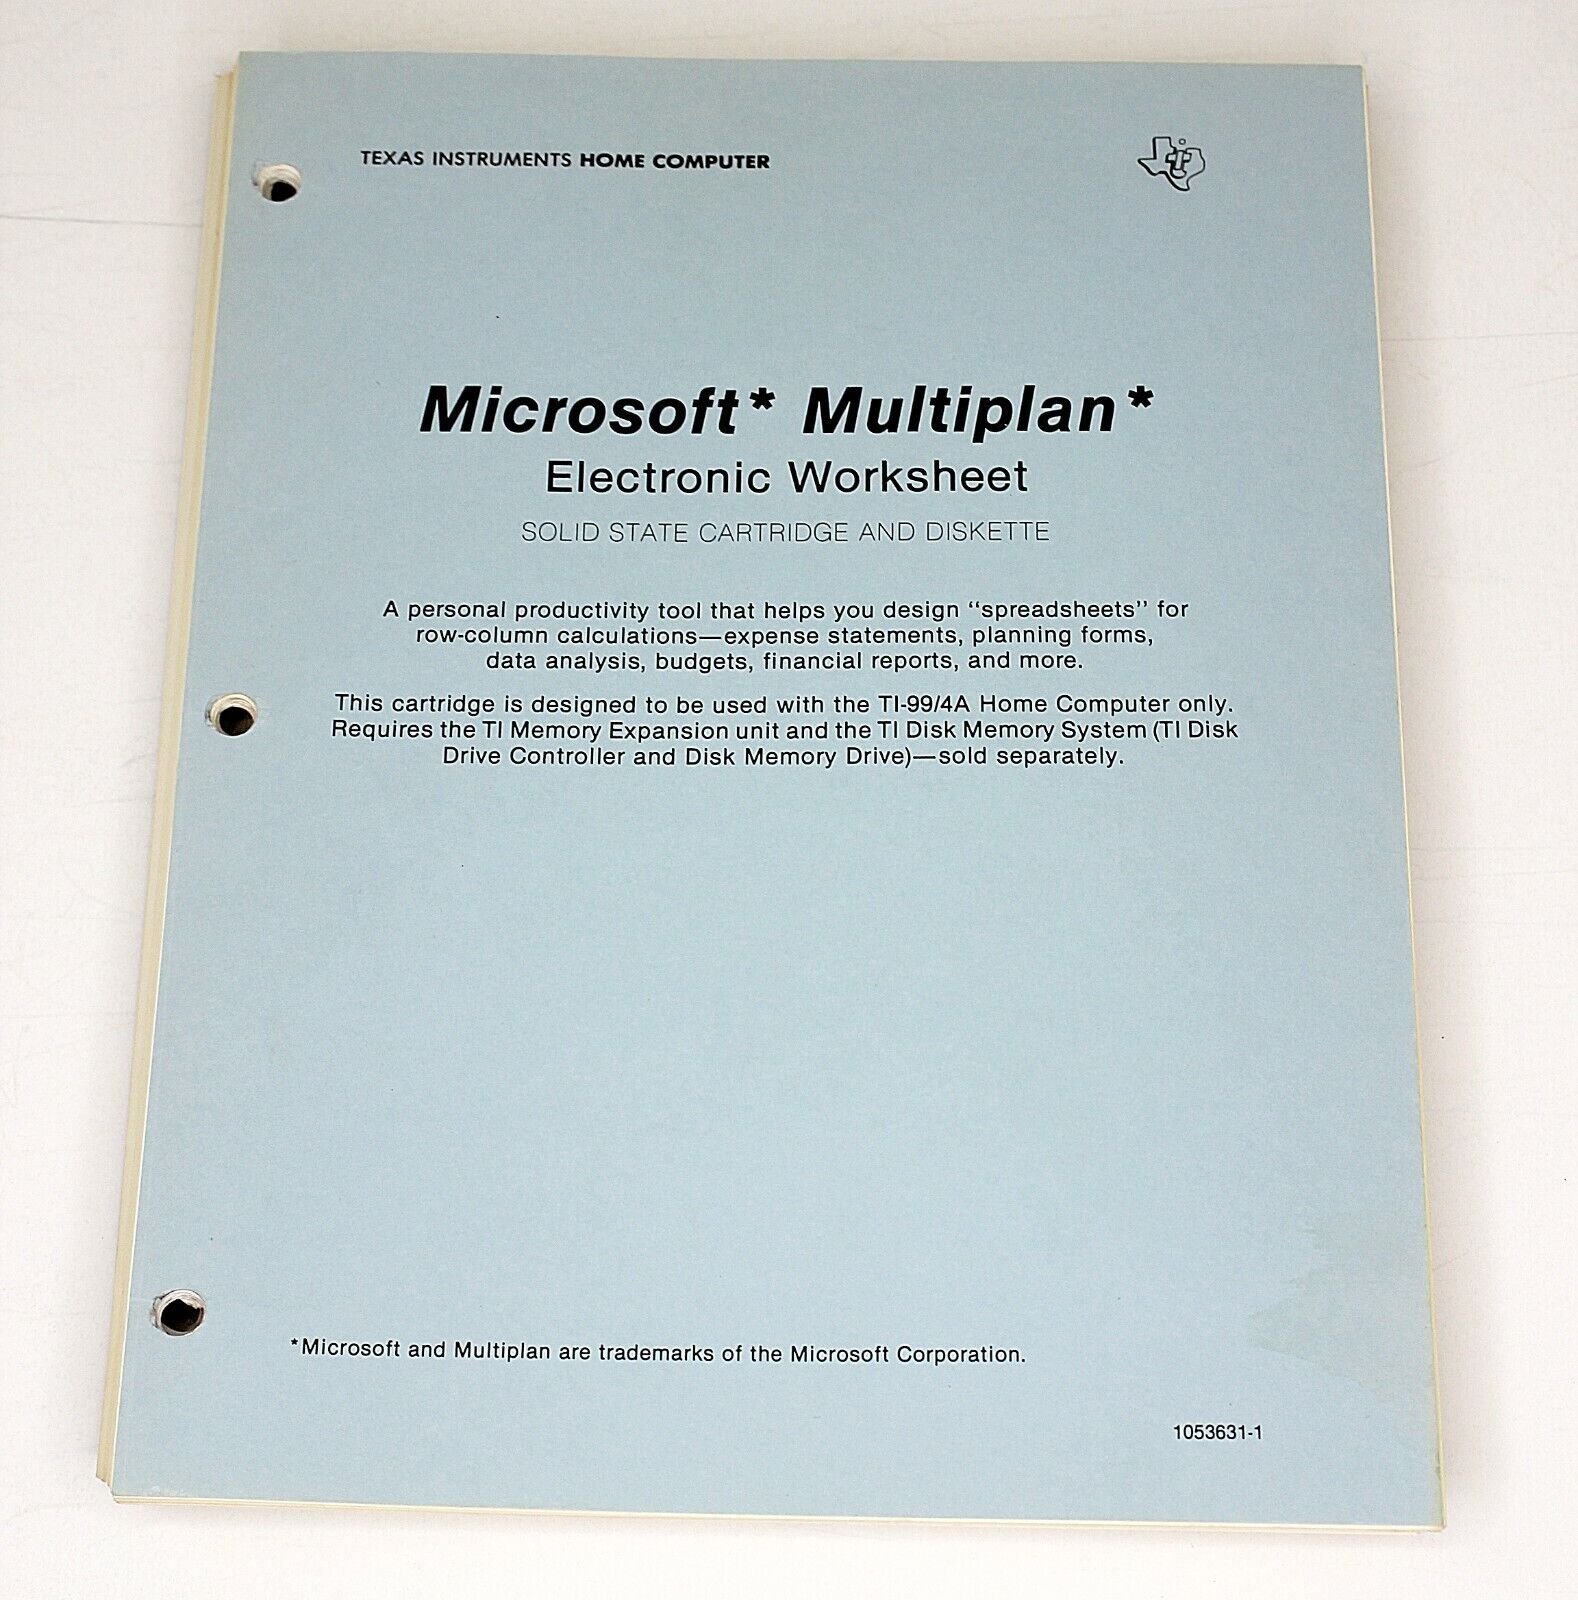 Texas Instruments Microsoft Multiplan Electronic Worksheet Vintage Computers